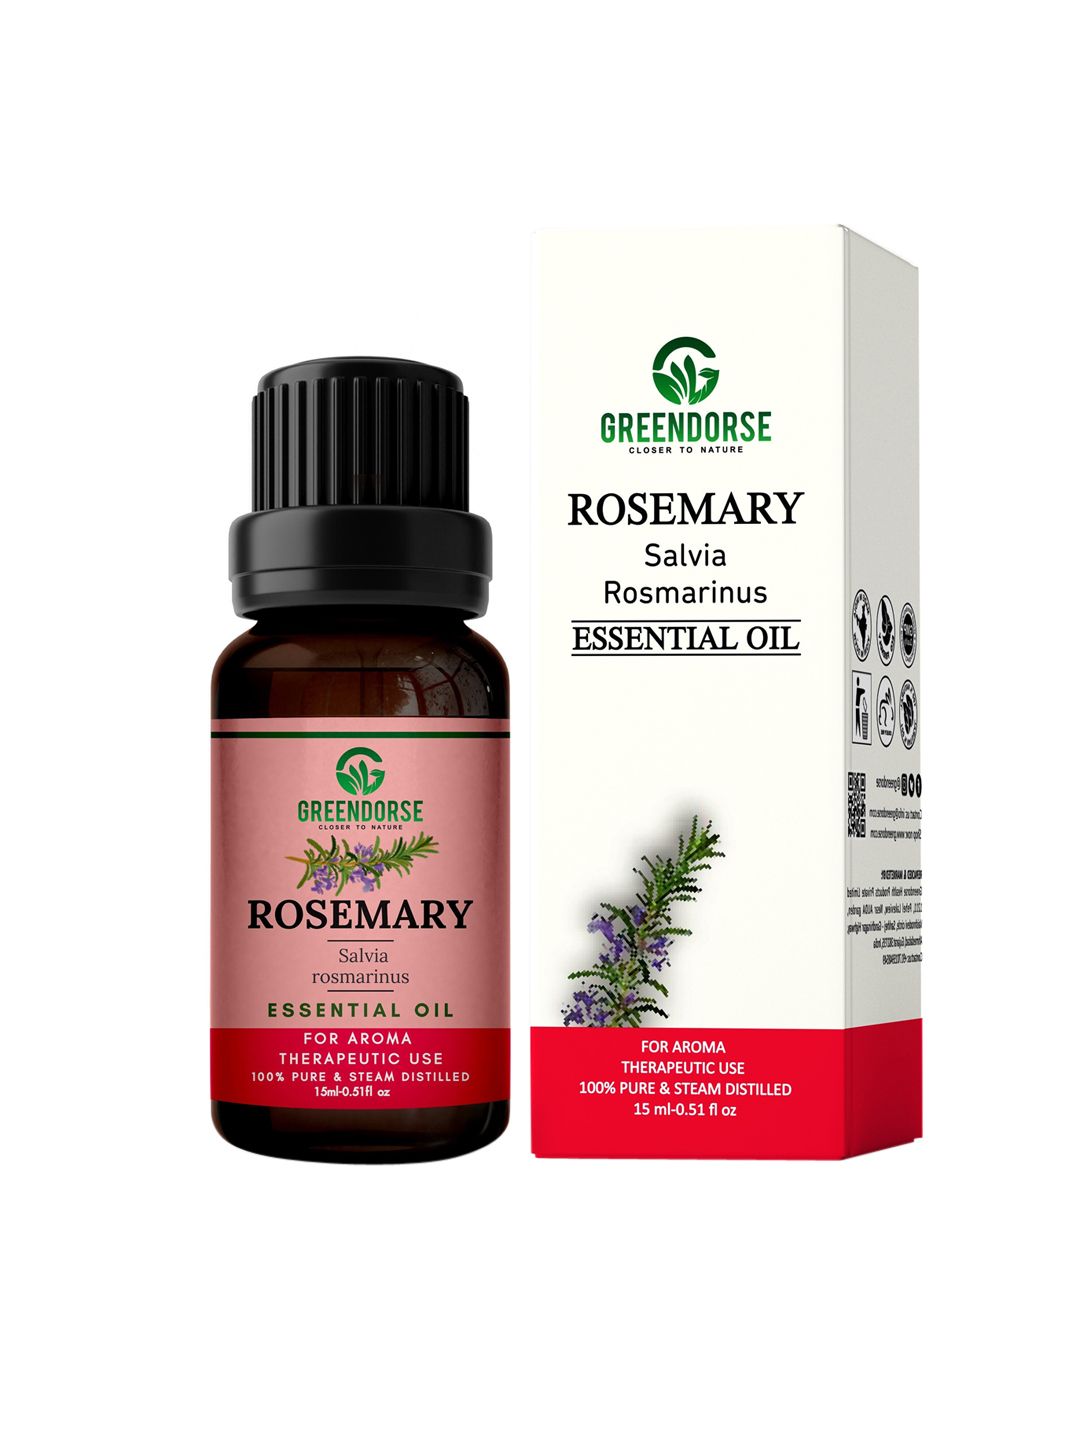 GREENDORSE Rosemary Essential Oil Price in India